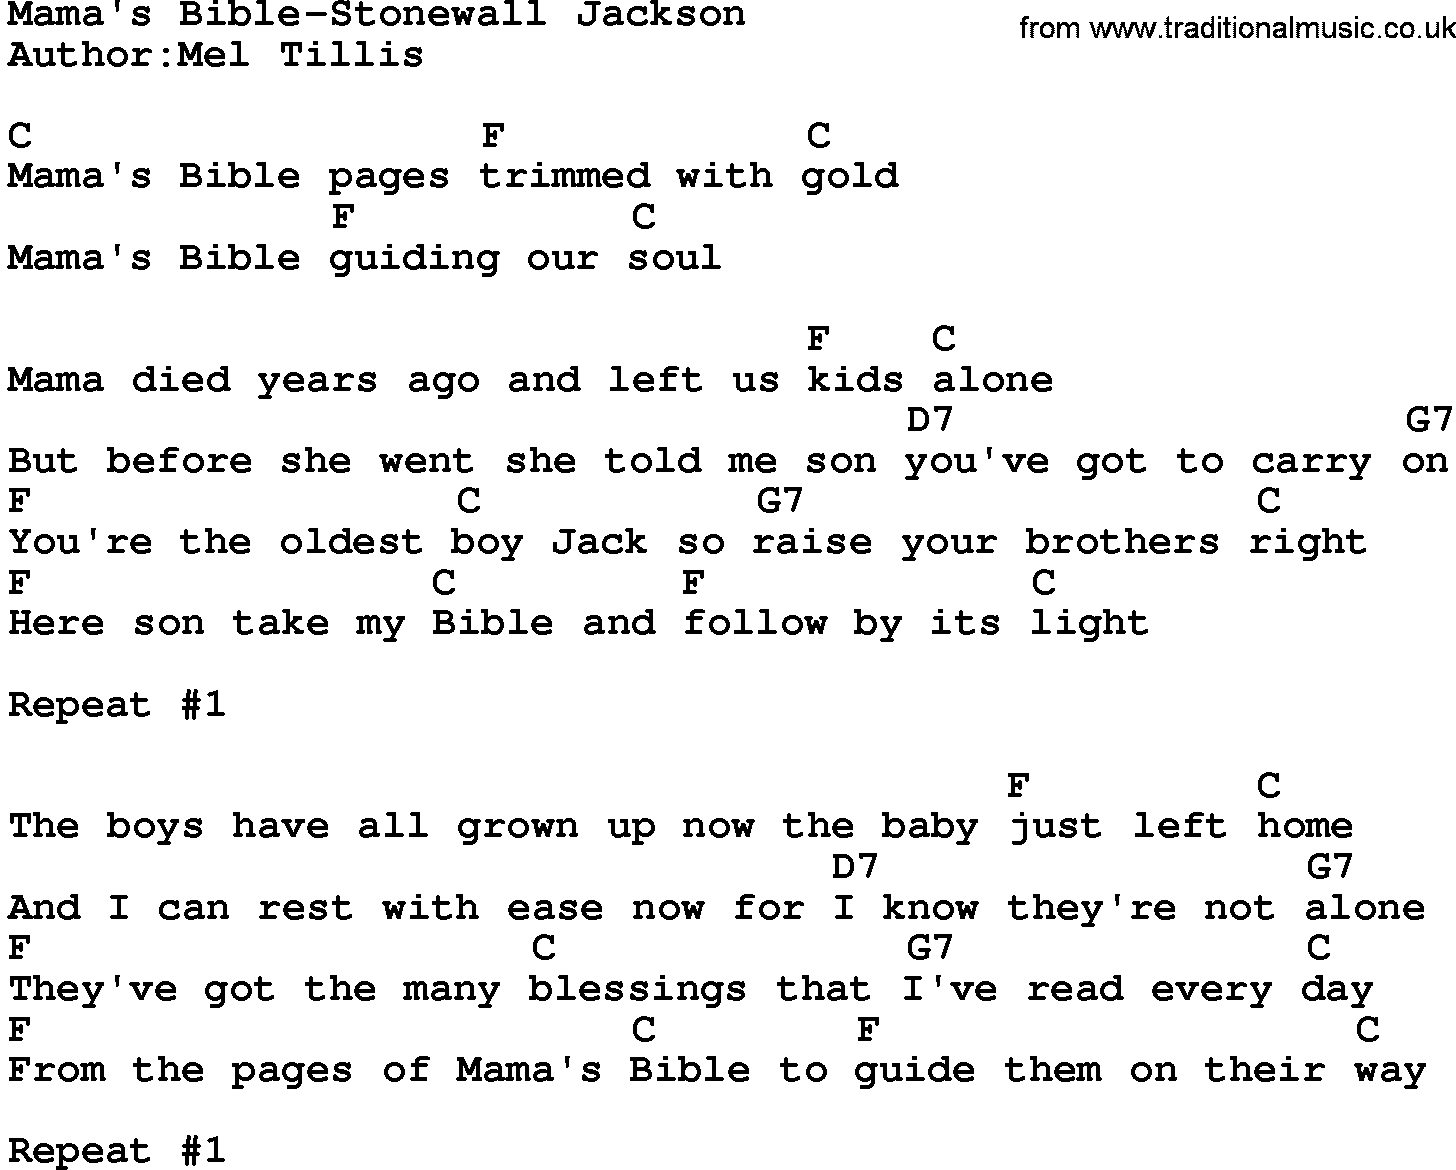 Country music song: Mama's Bible-Stonewall Jackson lyrics and chords